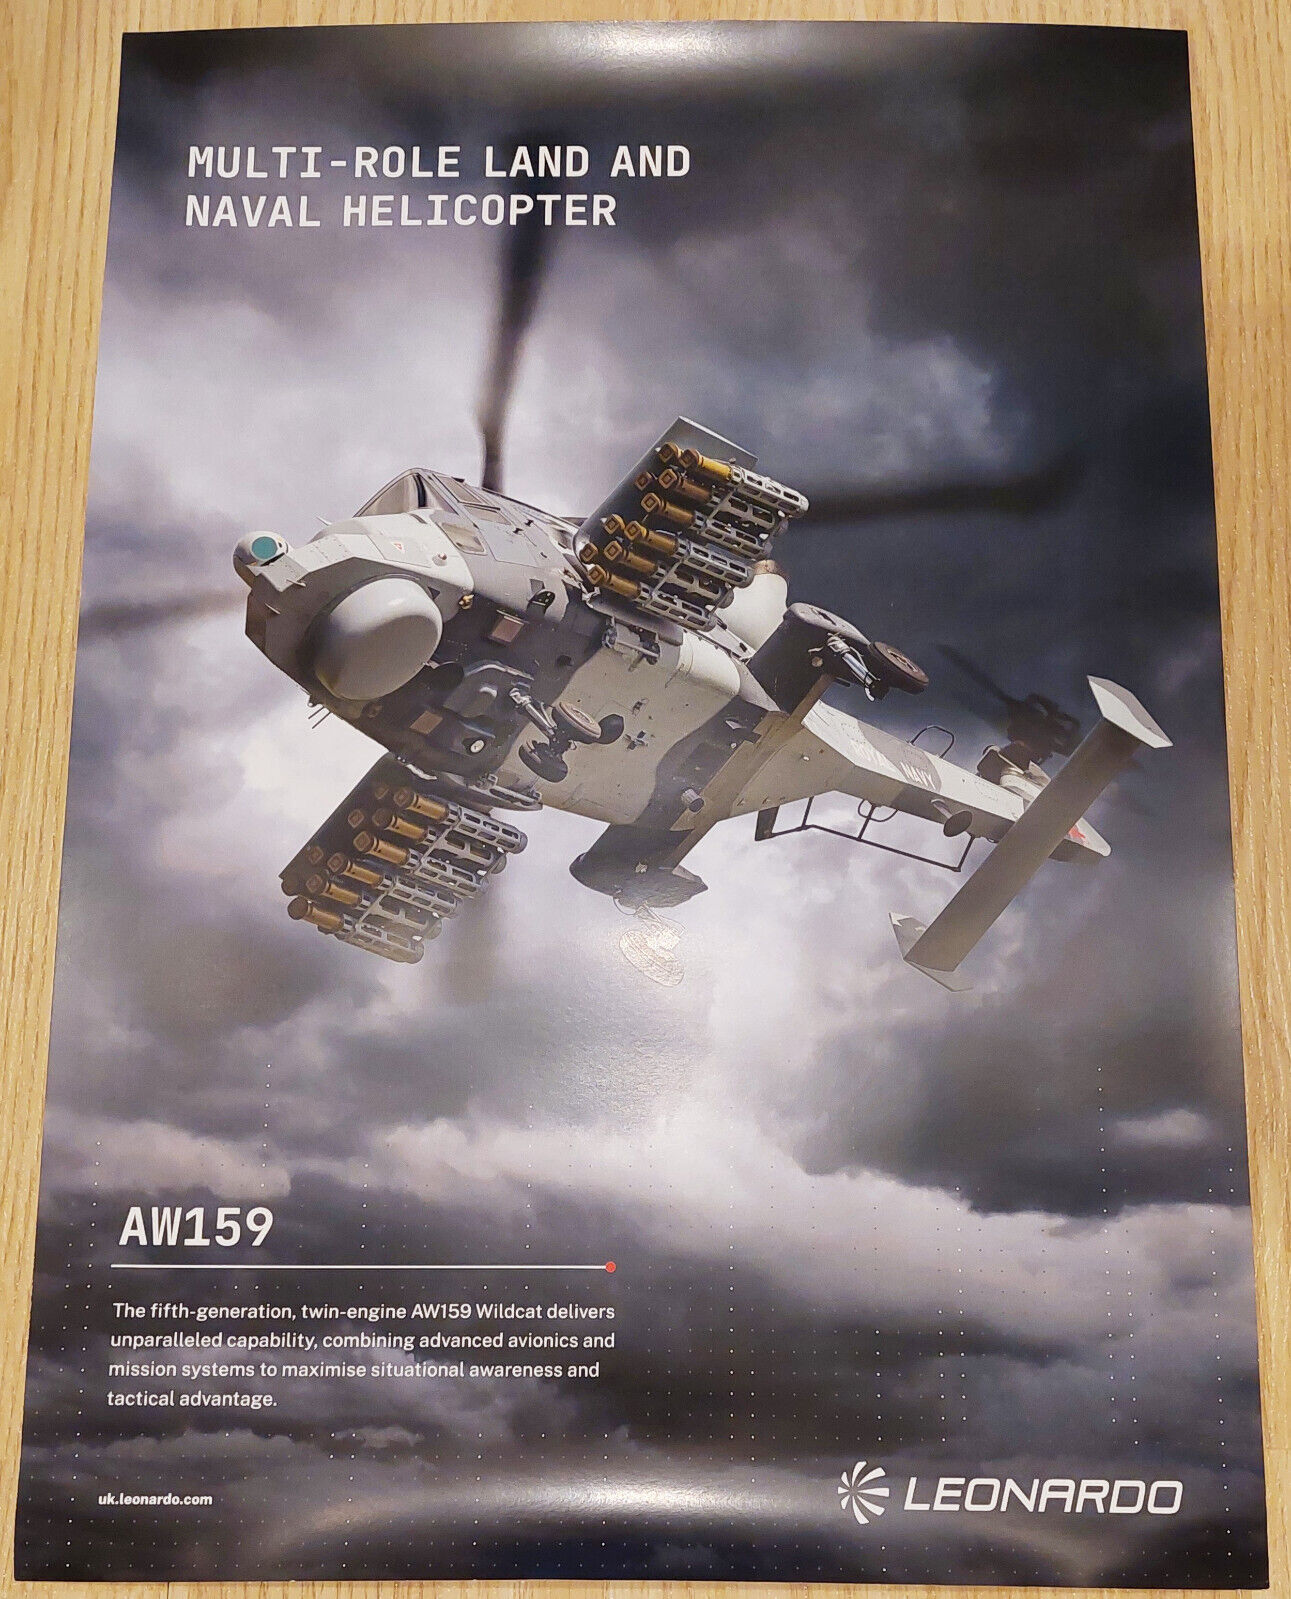 Leonardo Agusta Westland AW159 Wildcat Helicopter Promotional Info Poster A3